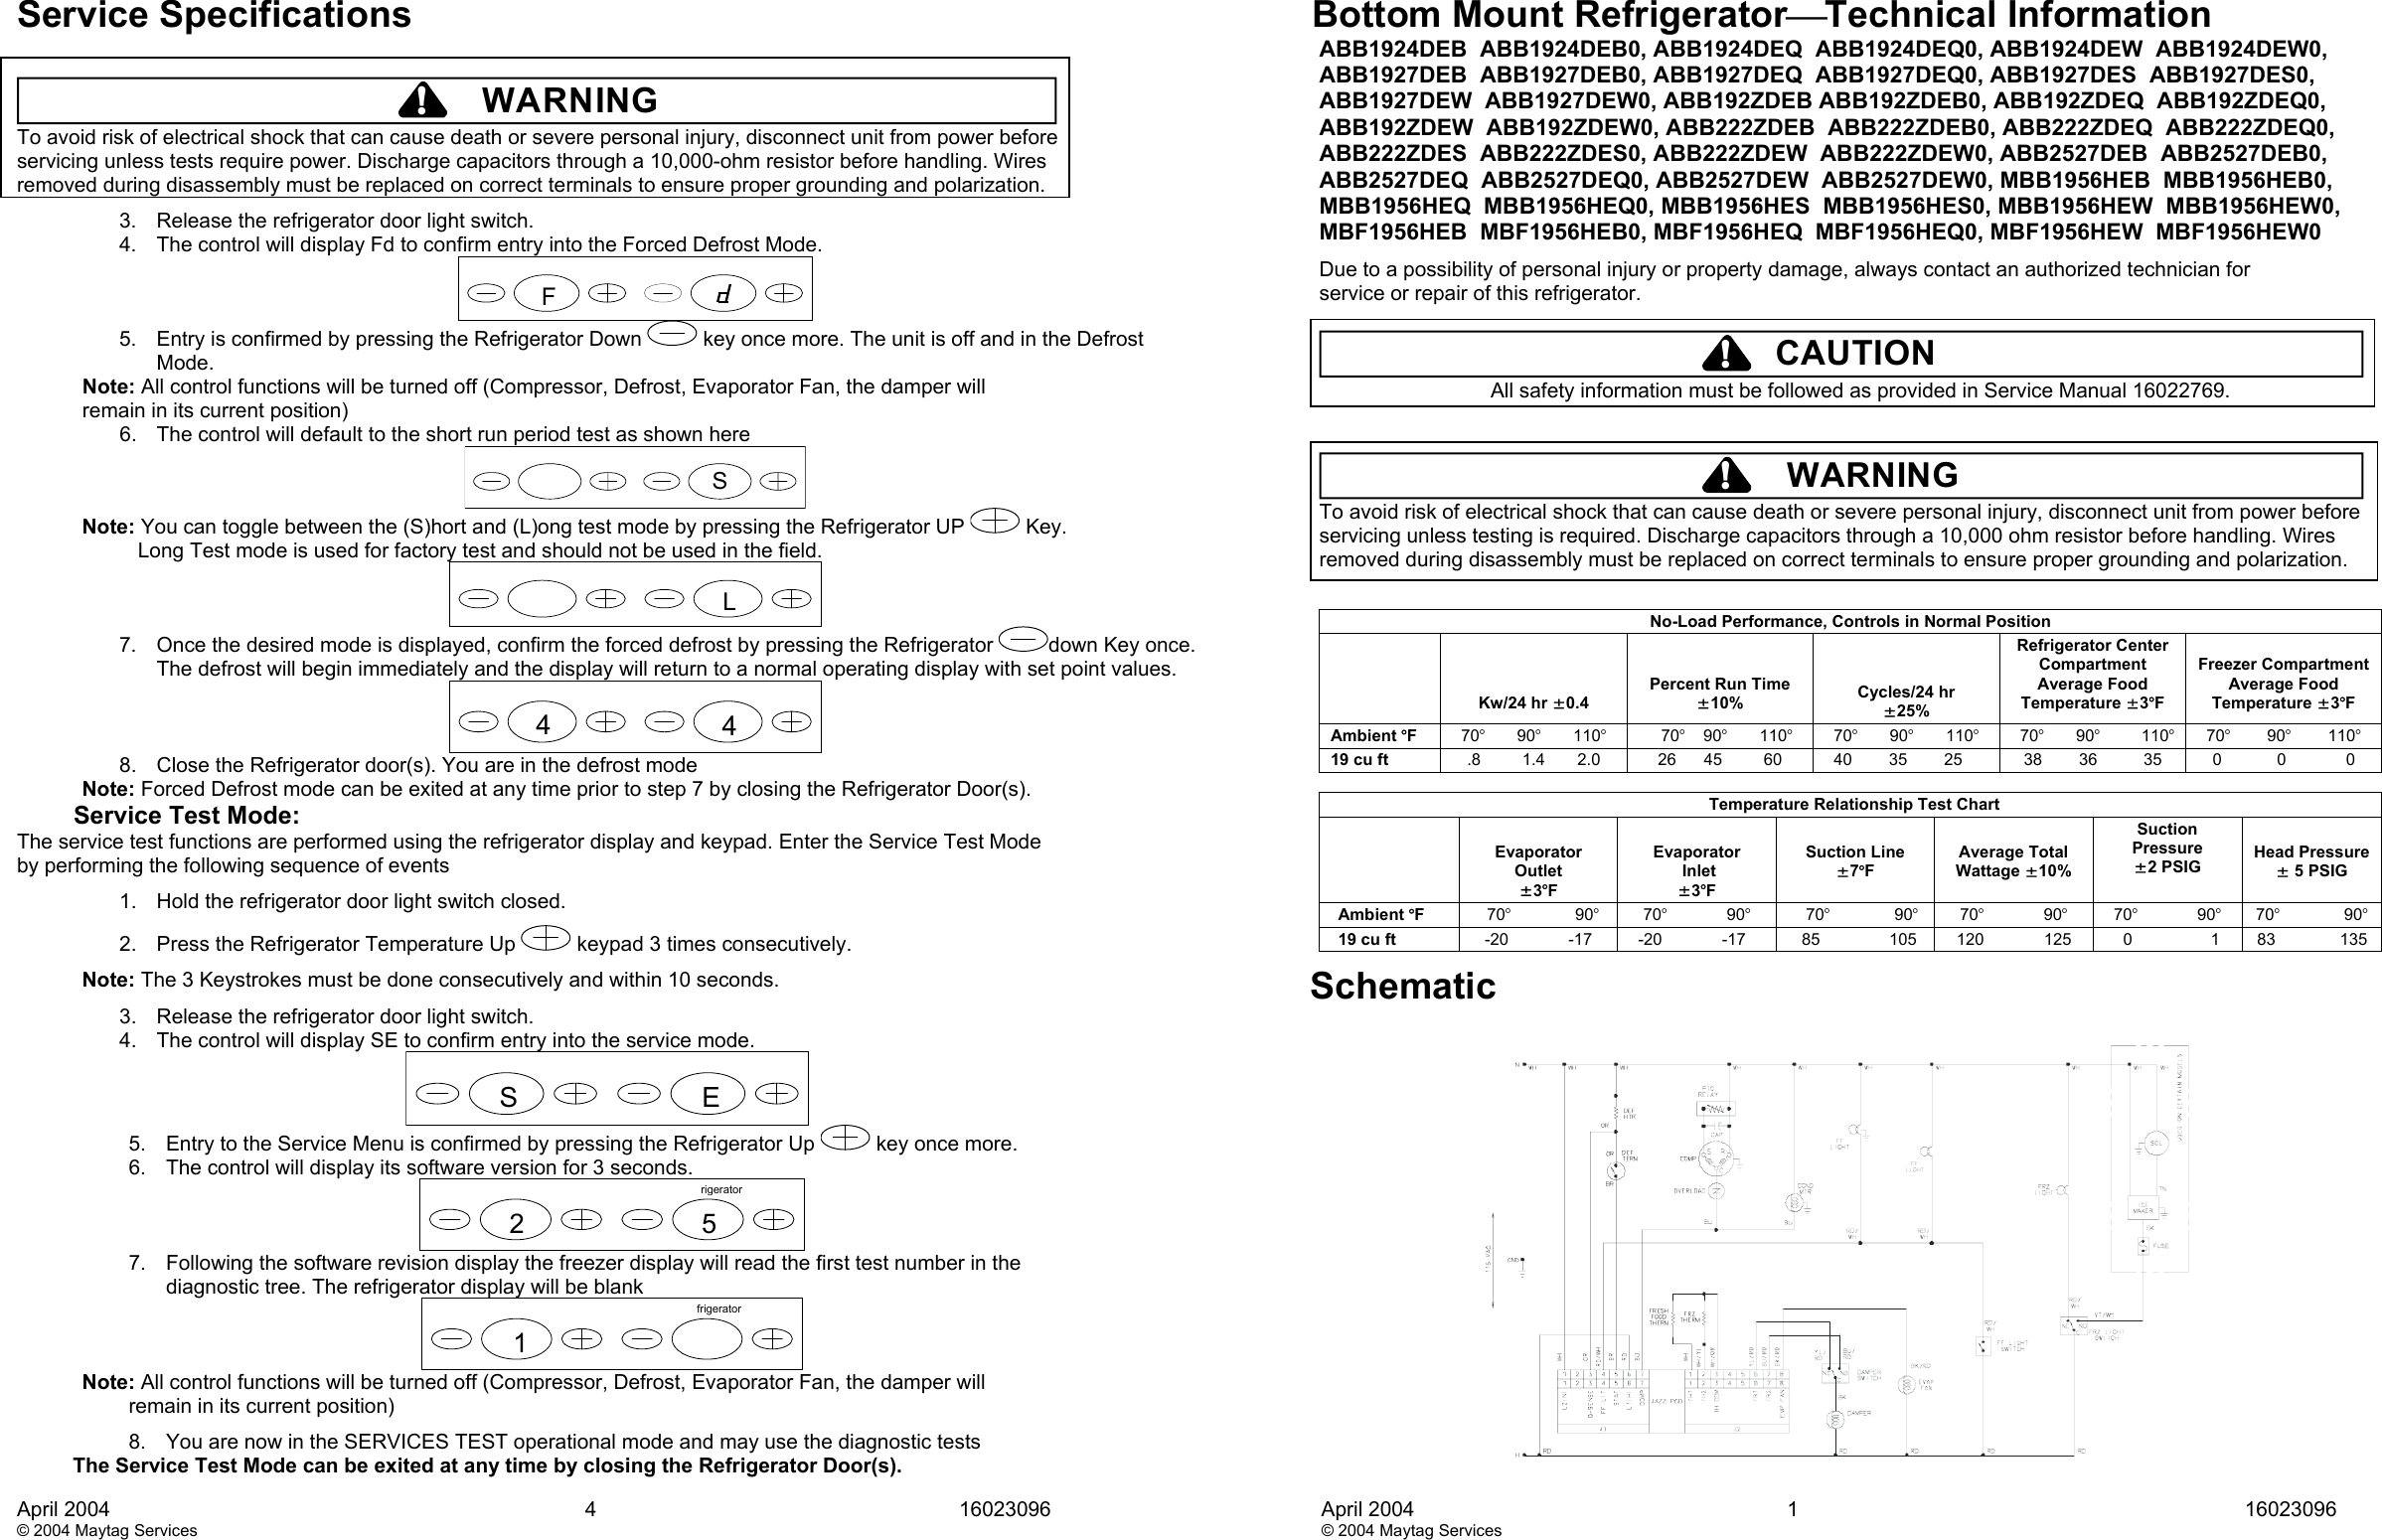 Page 1 of 4 - Technical Data Sheet  Amana Bottom Mount Refrigerator ABB1924DEB